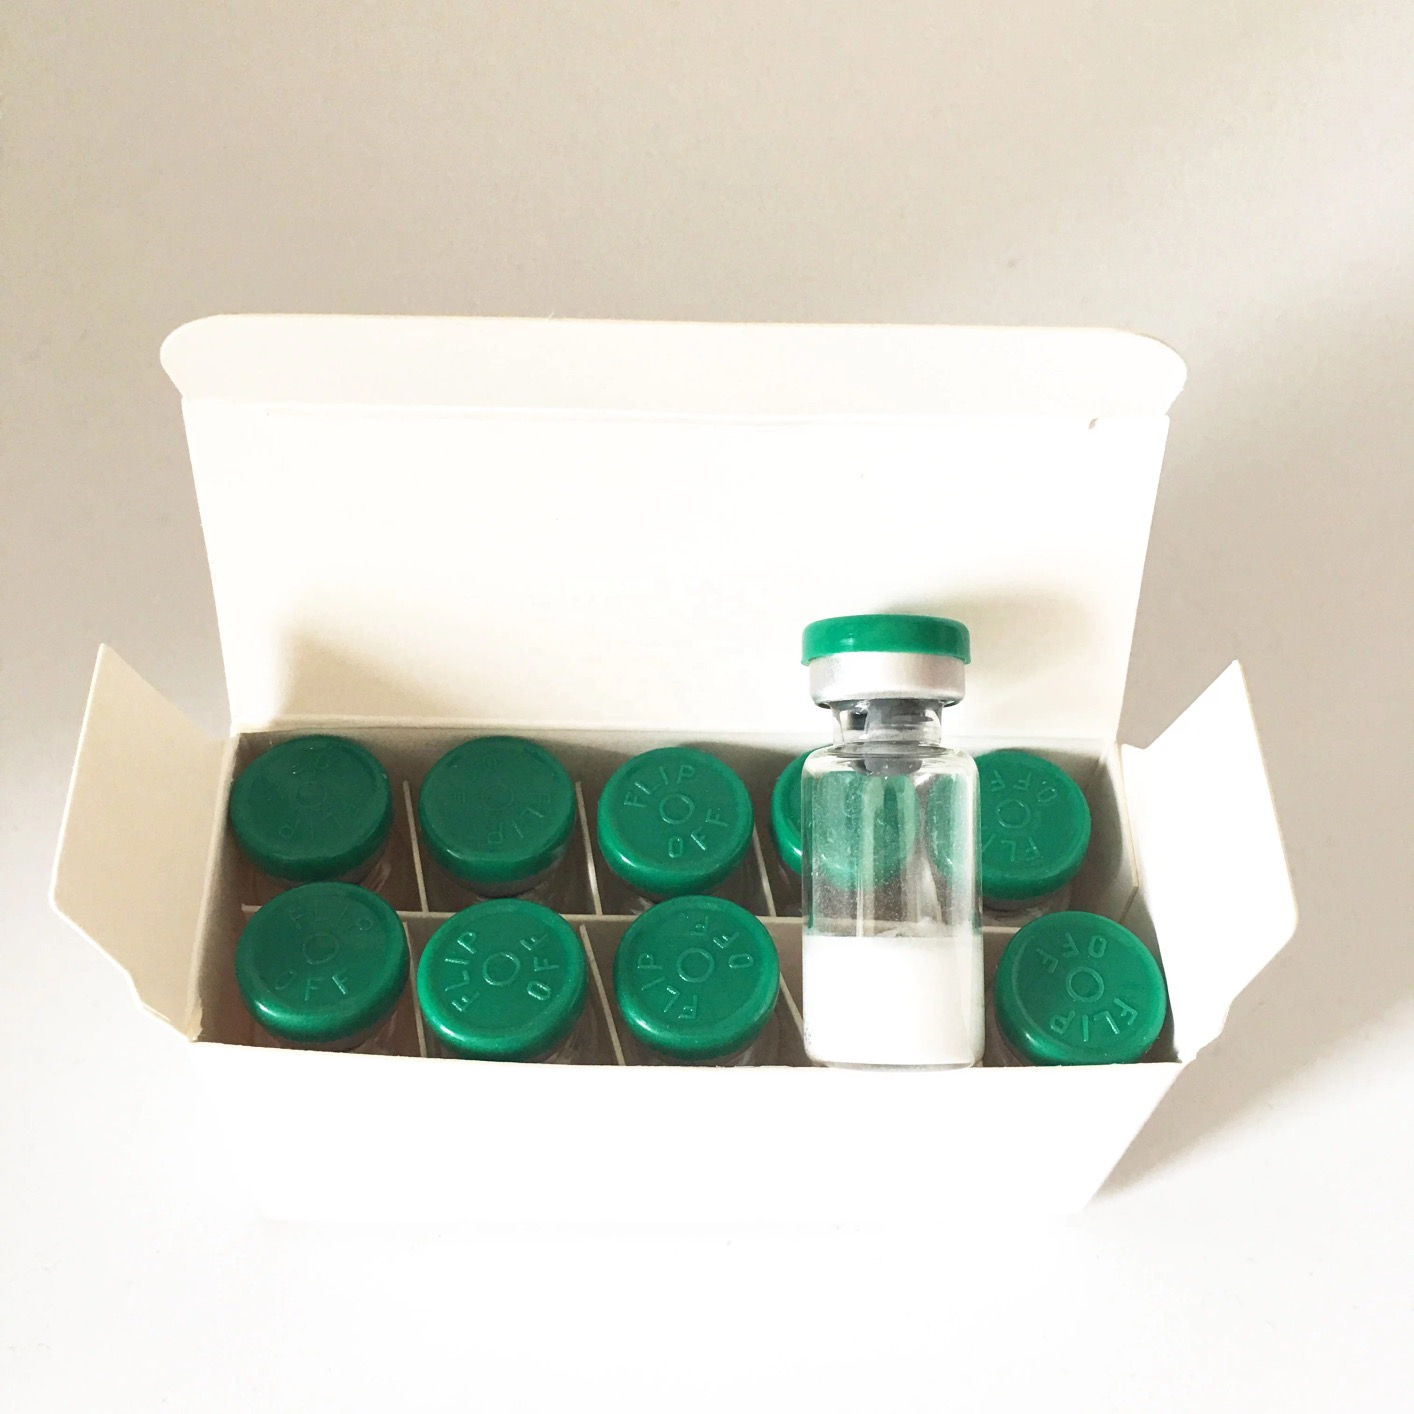 Suministro de fábrica Péptidos puros de alta calidad Polvo de triptorelina de 2 mg